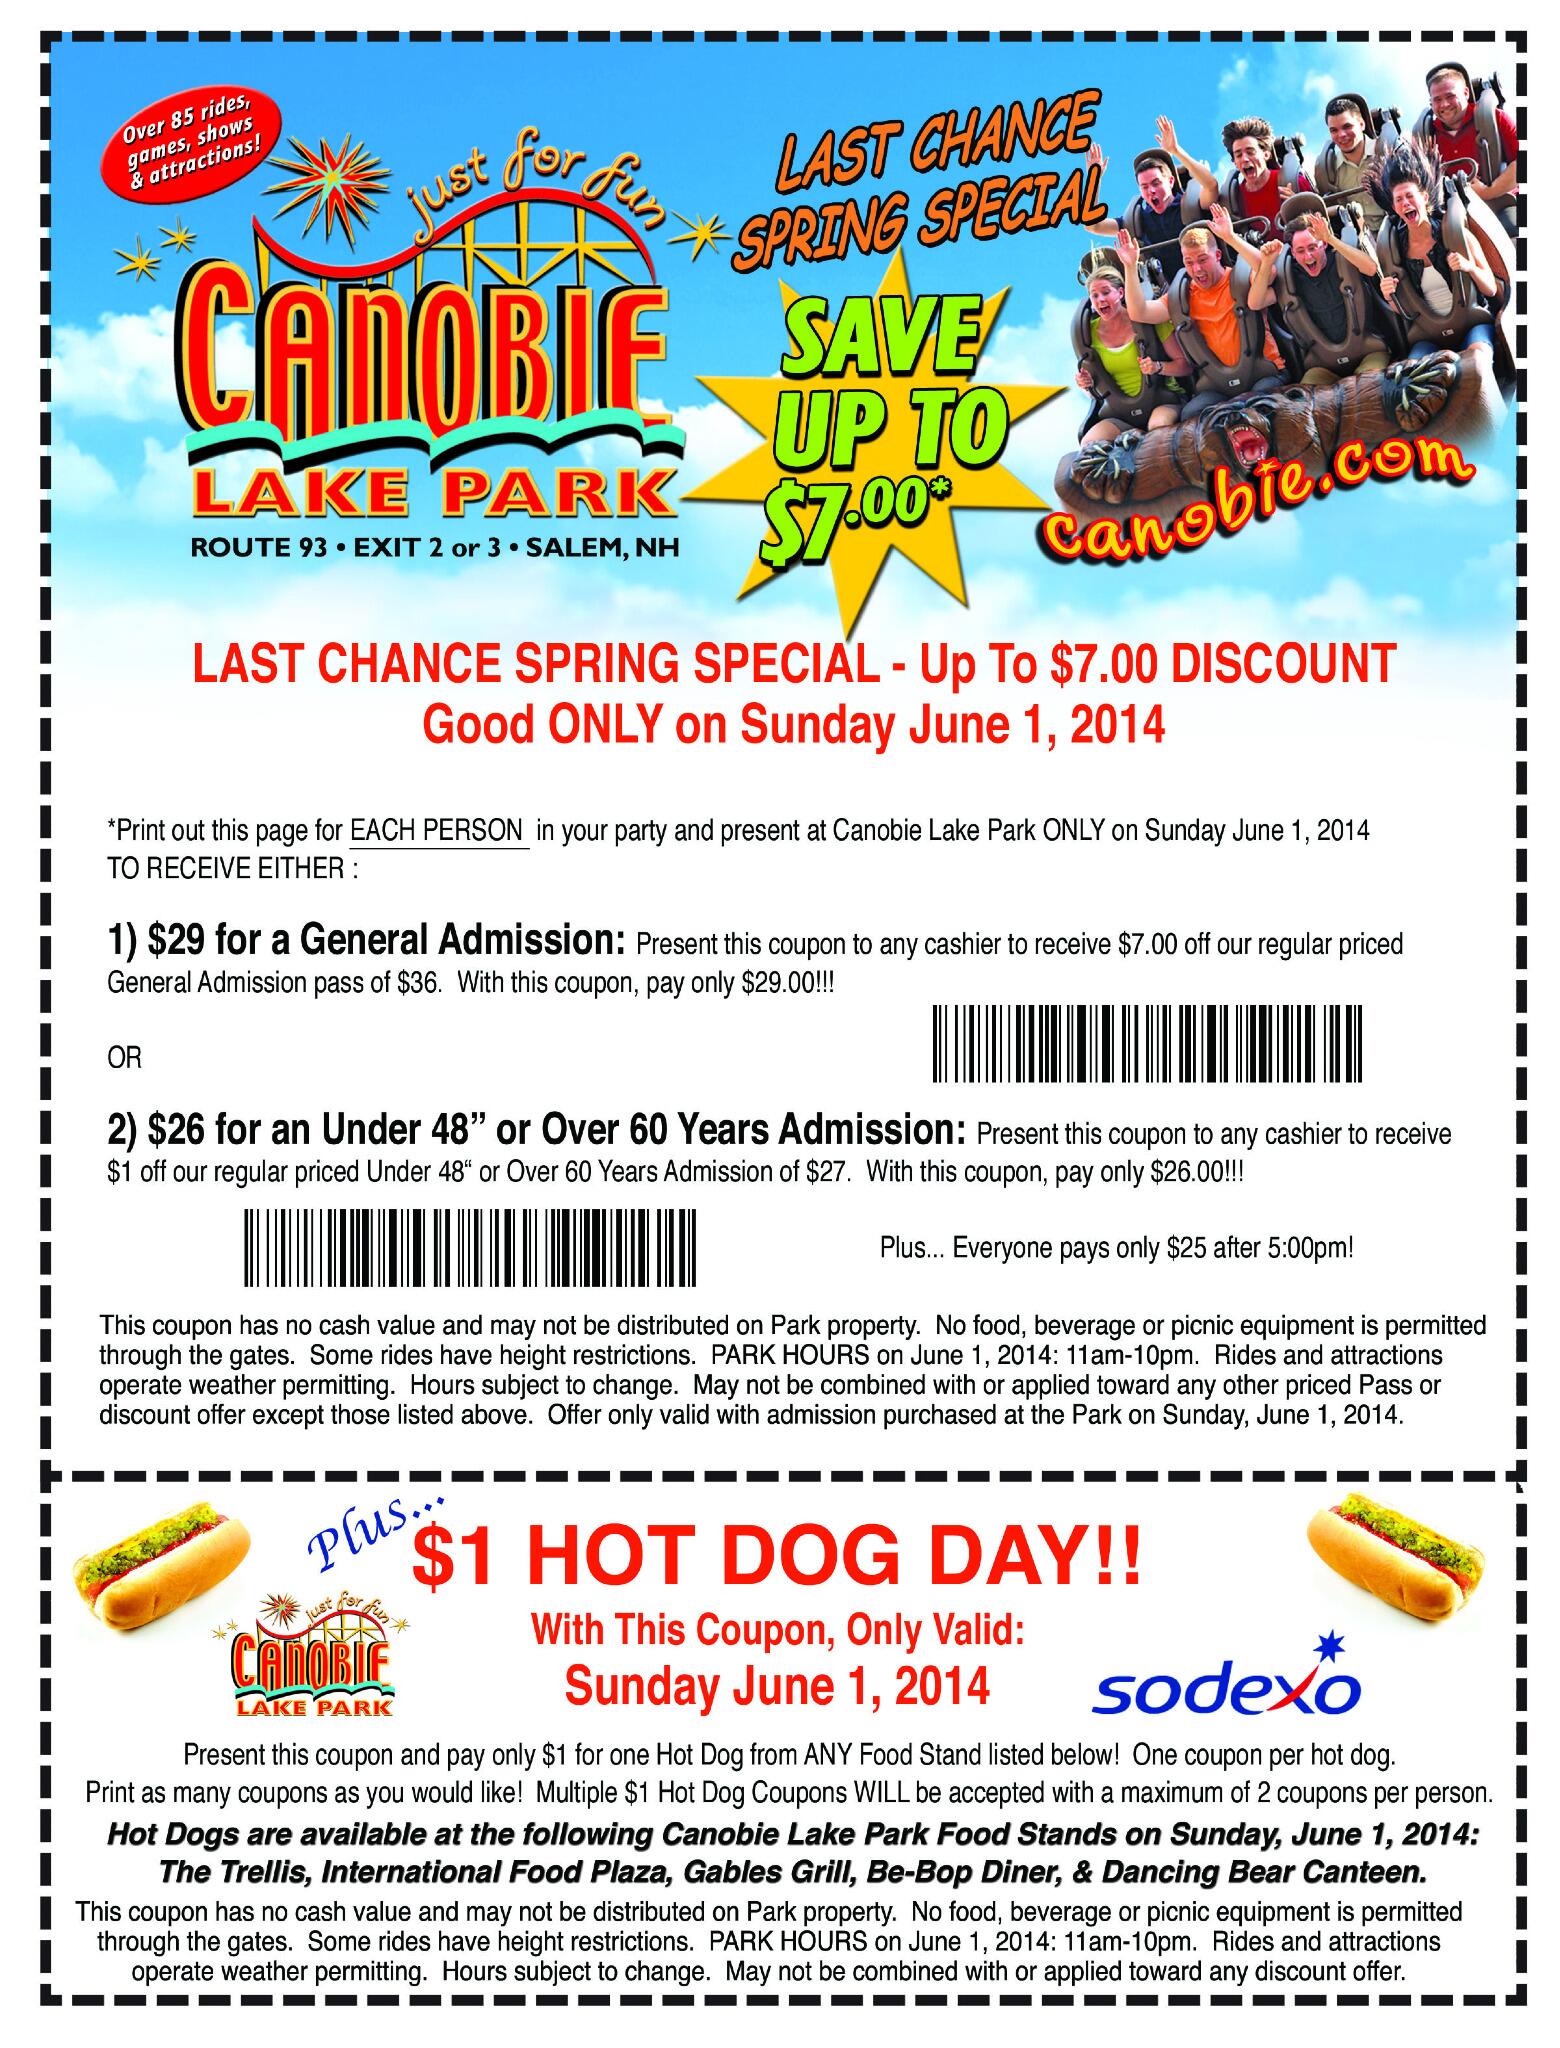 Canobie Lake Park Coupons Printable Coupons DB 2016